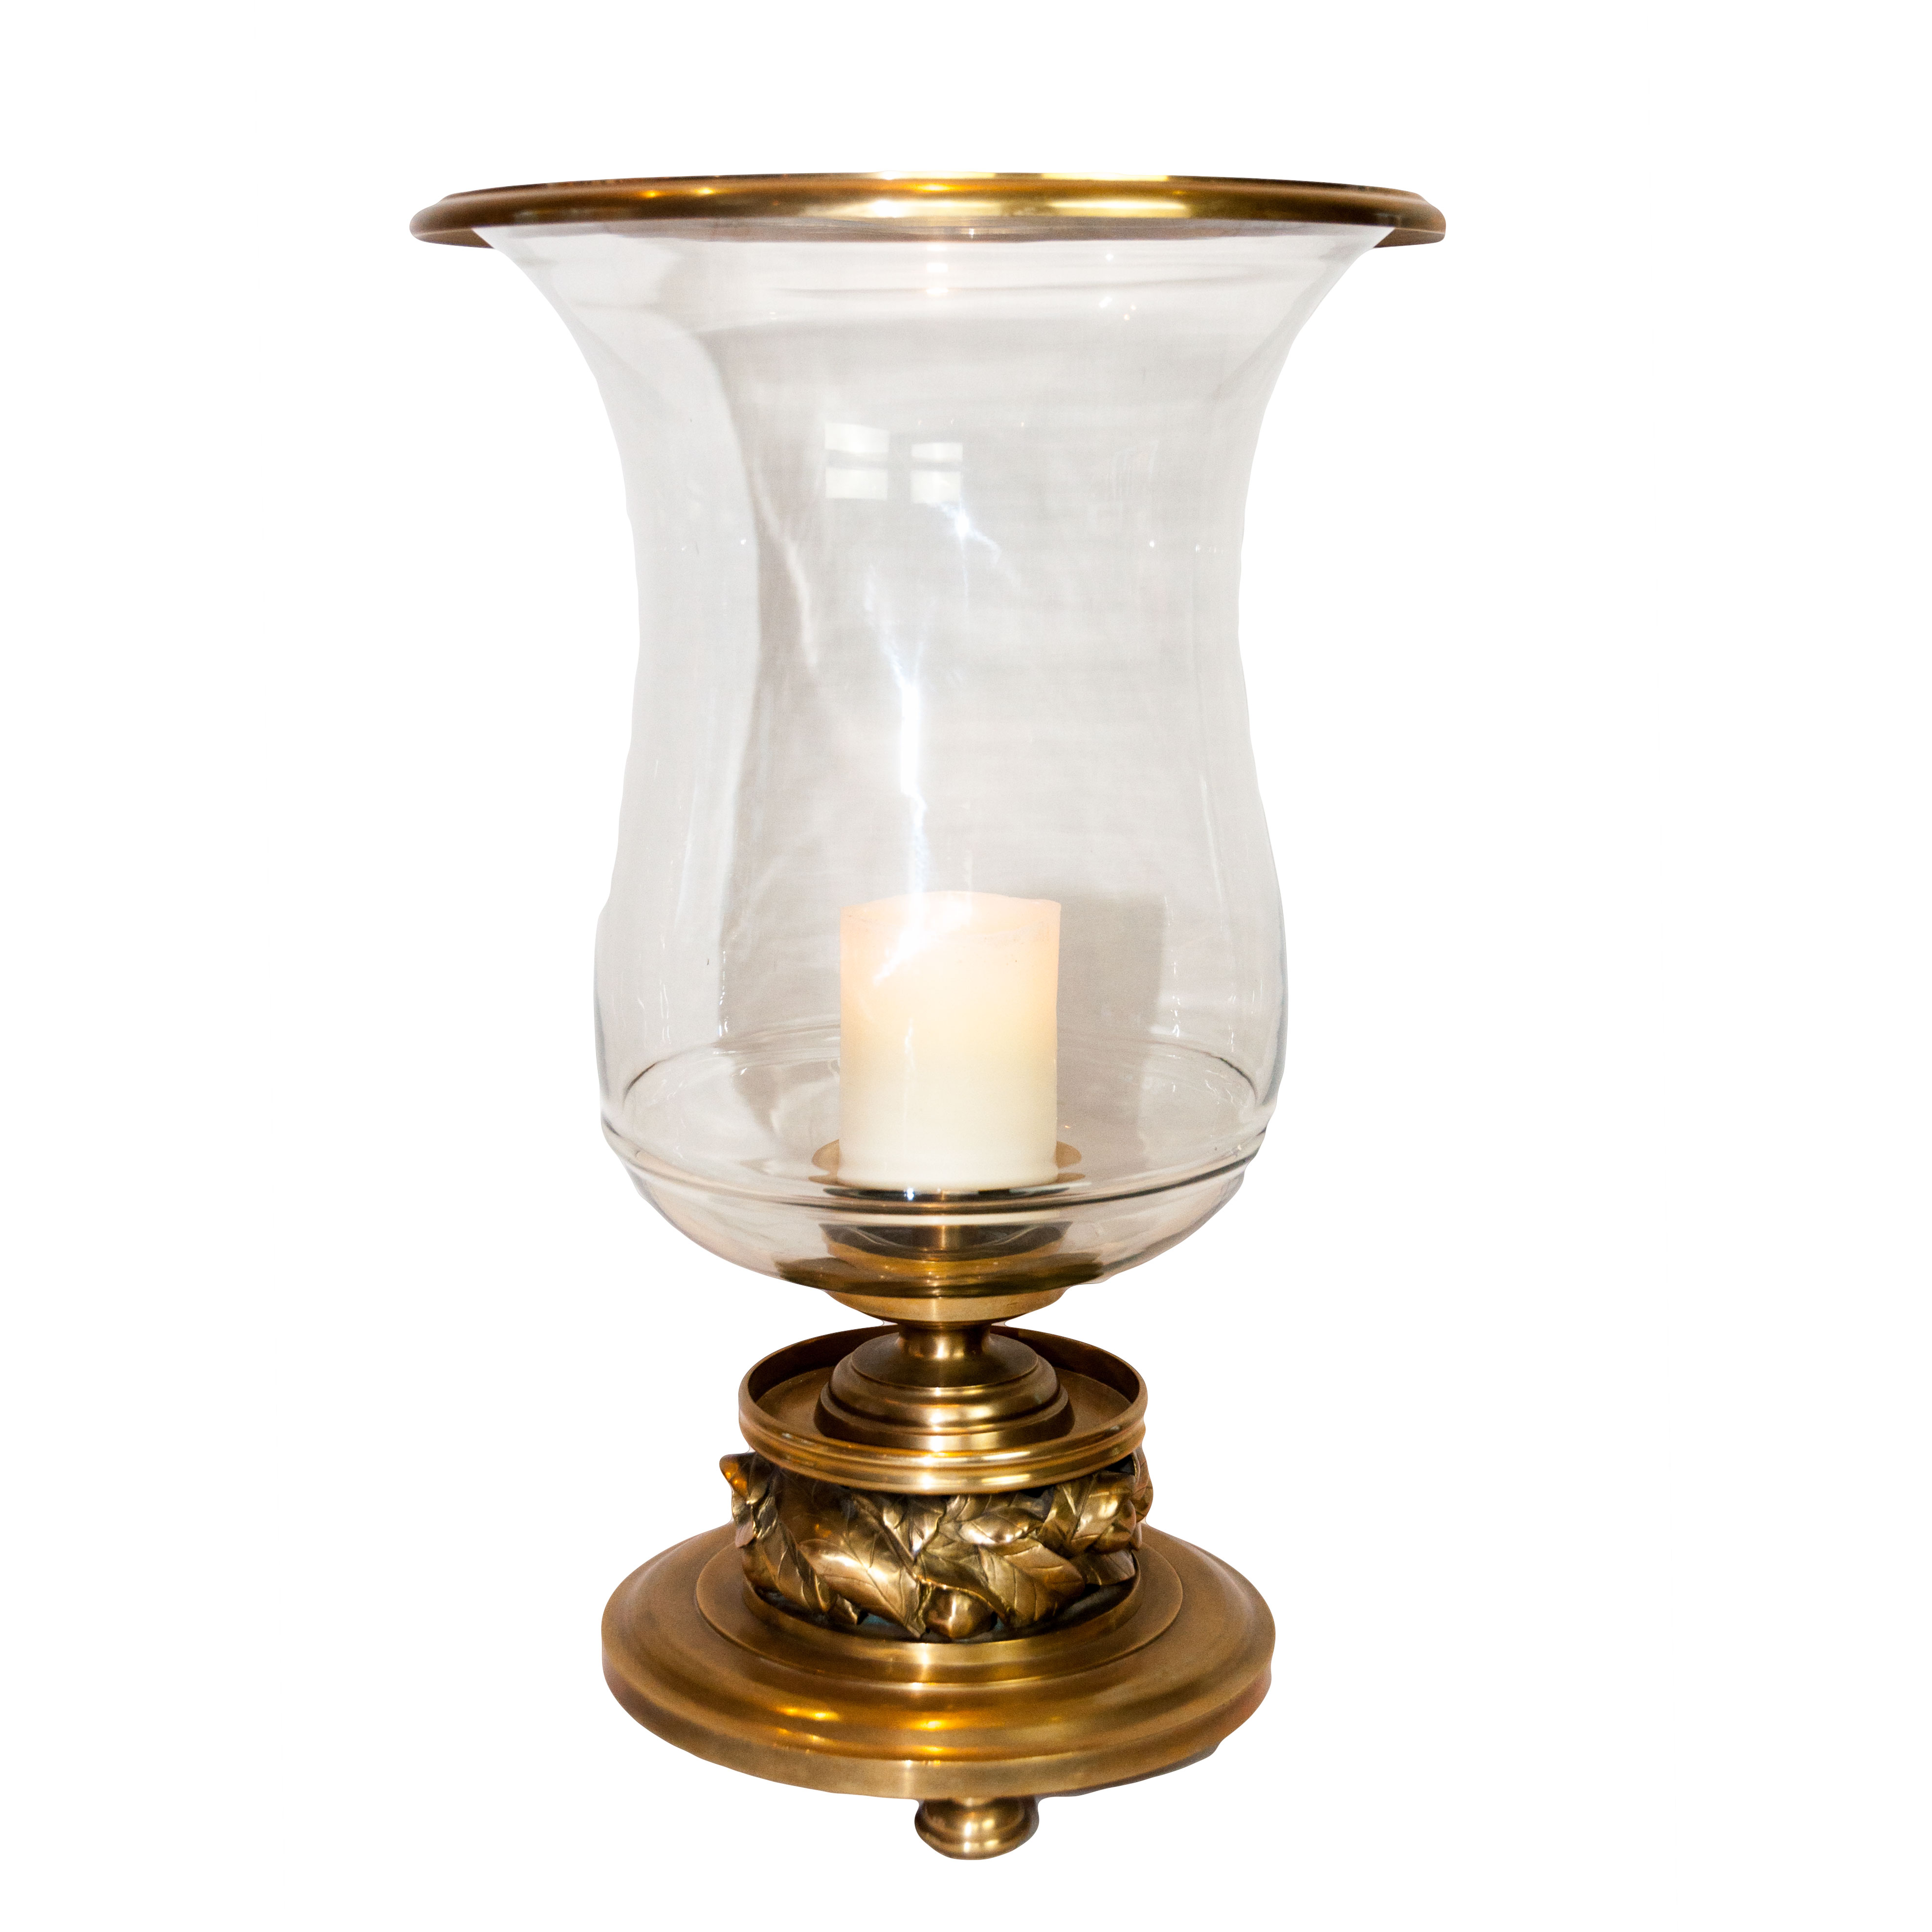 Hambridge Brass Hurricane Lamp With, Brass Hurricane Lamps Candles